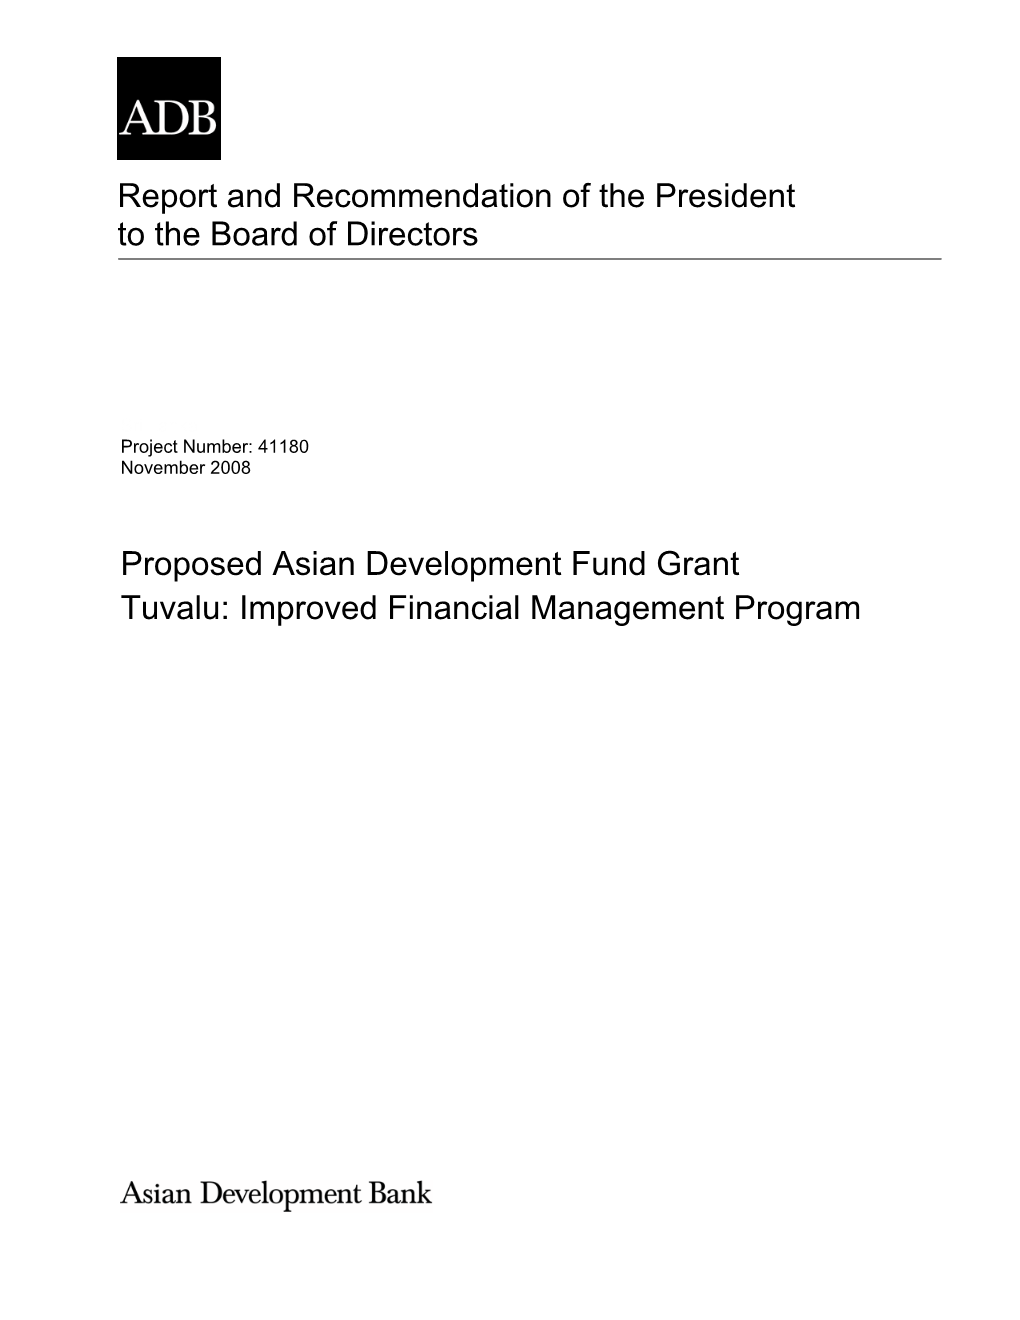 Proposed Asian Development Fund Grant Tuvalu: Improved Financial Management Program